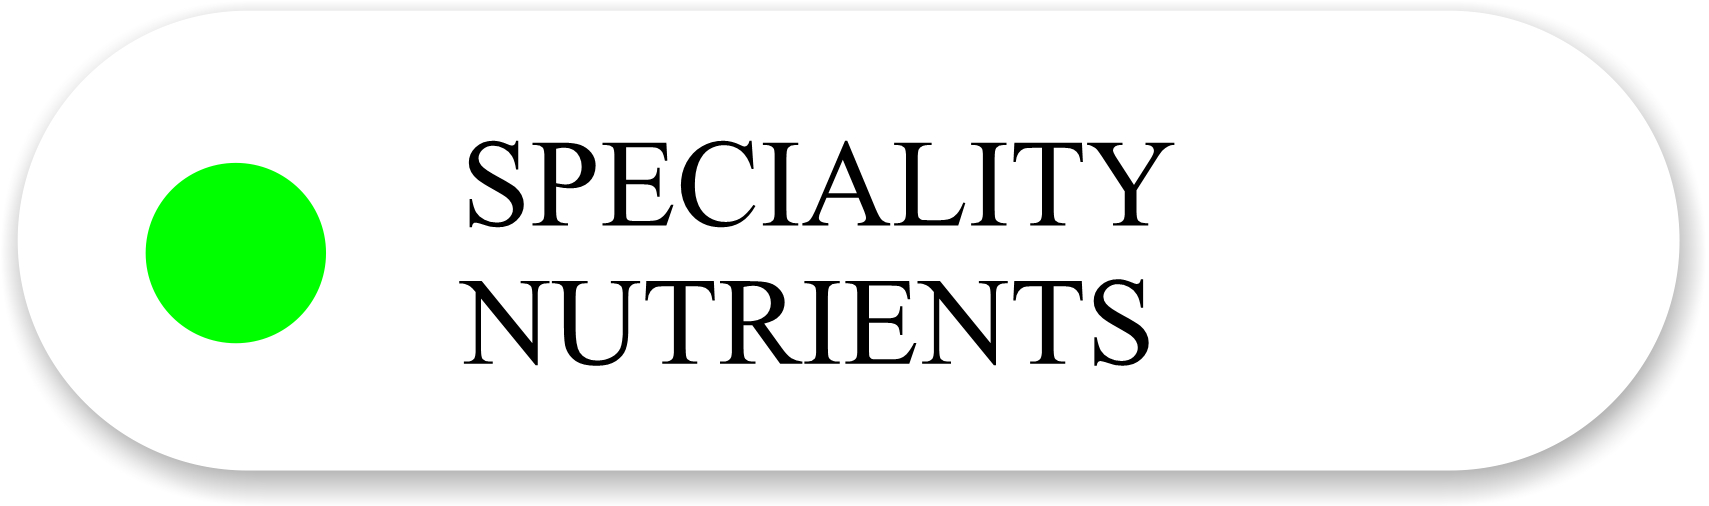 speciality nutrients